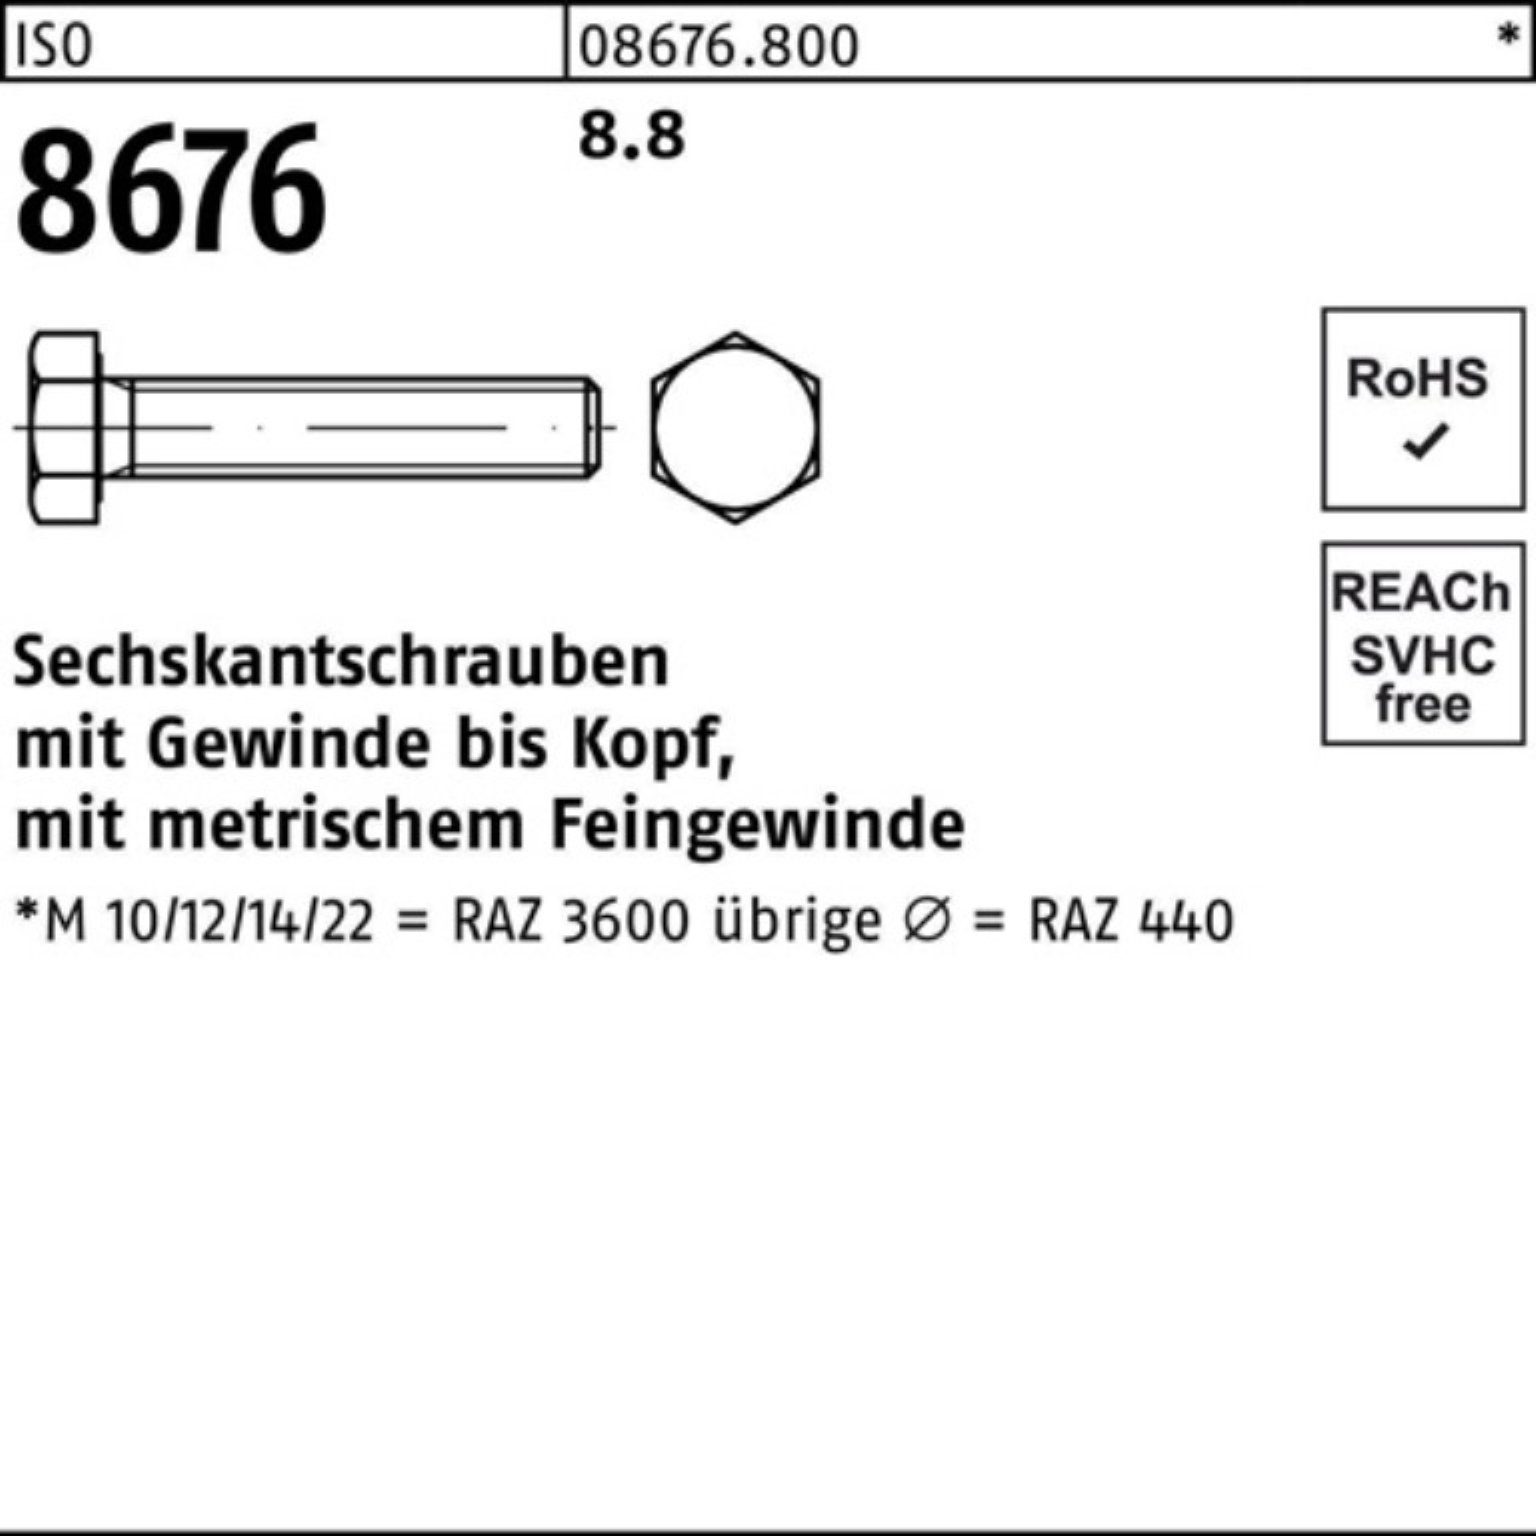 ISO Pack Stück Sechskantschraube 8676 8.8 M20x1,5x ISO Reyher 25 85 VG Sechskantschraube 100er